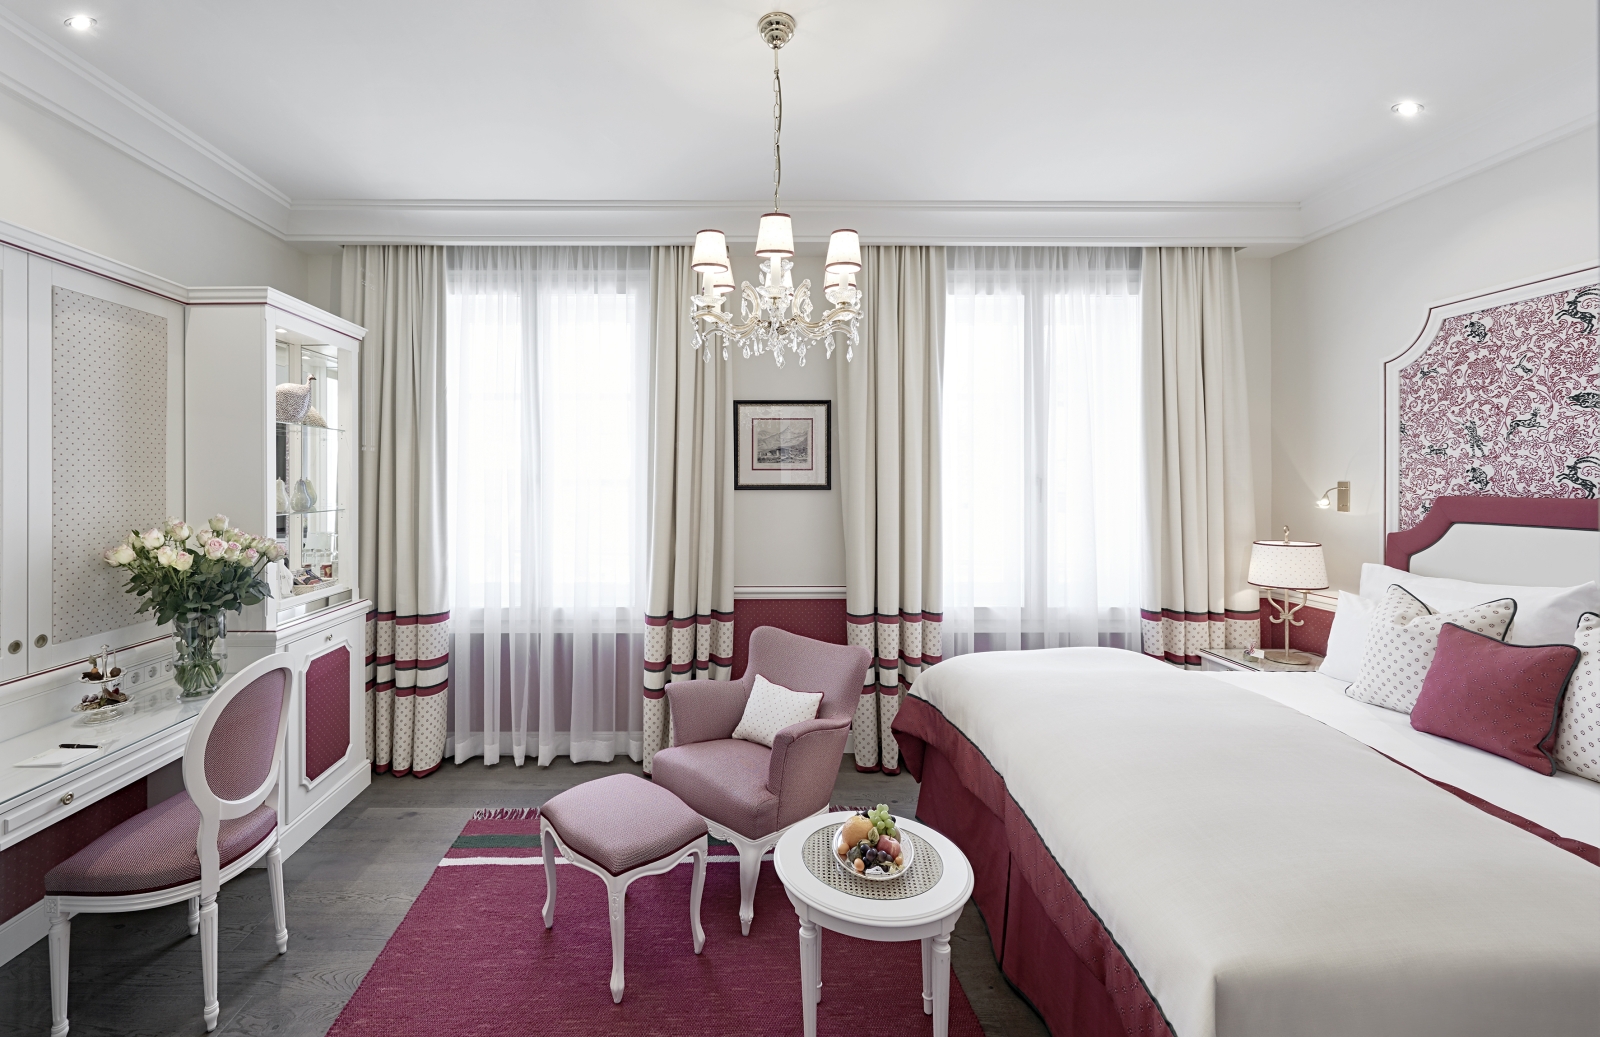 Deluxe Room at Hotel Sacher Salzburg